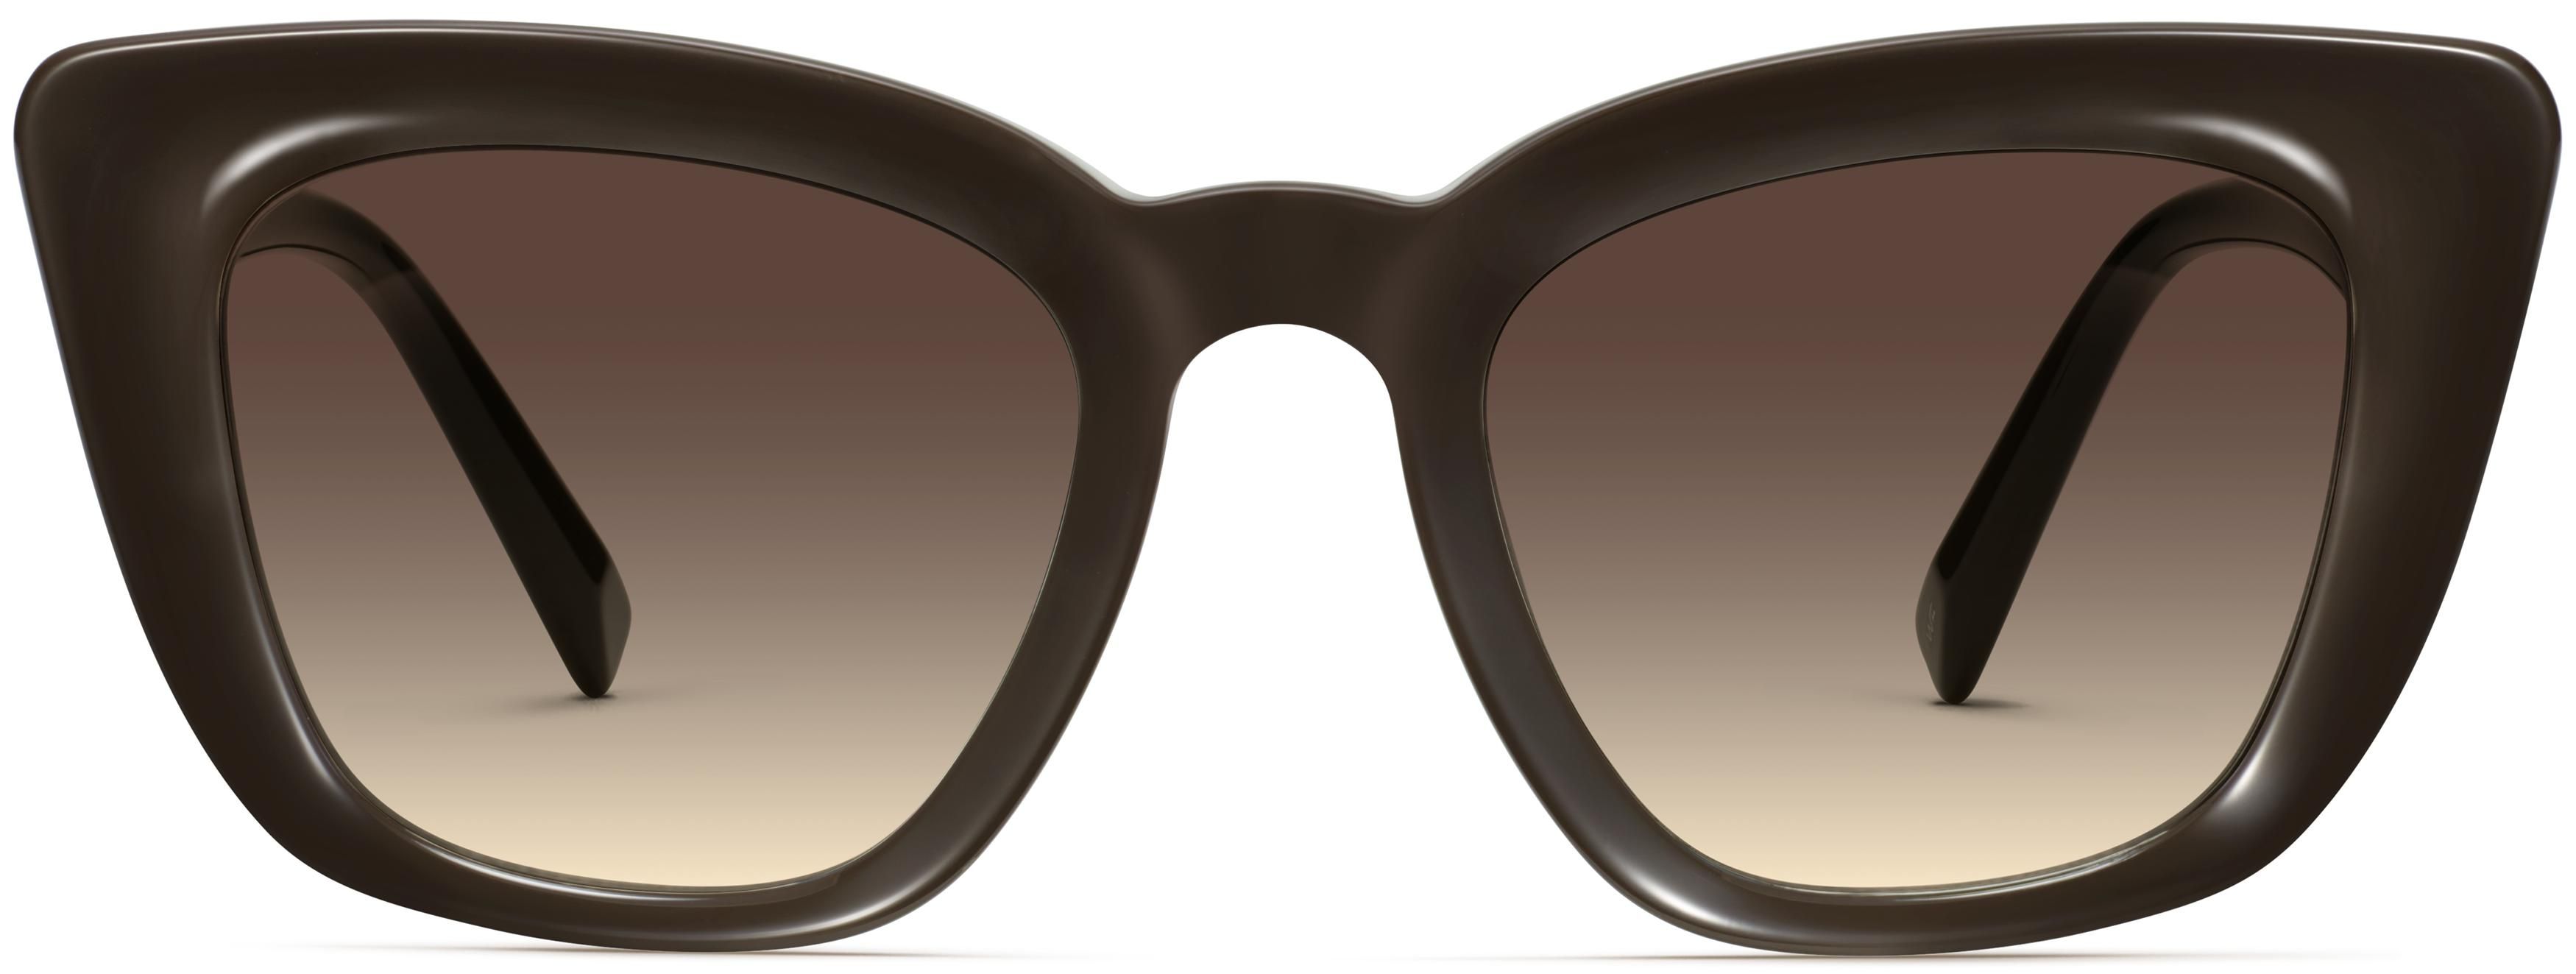 Lorena Sunglasses in Ganache | Warby Parker | Warby Parker (US)